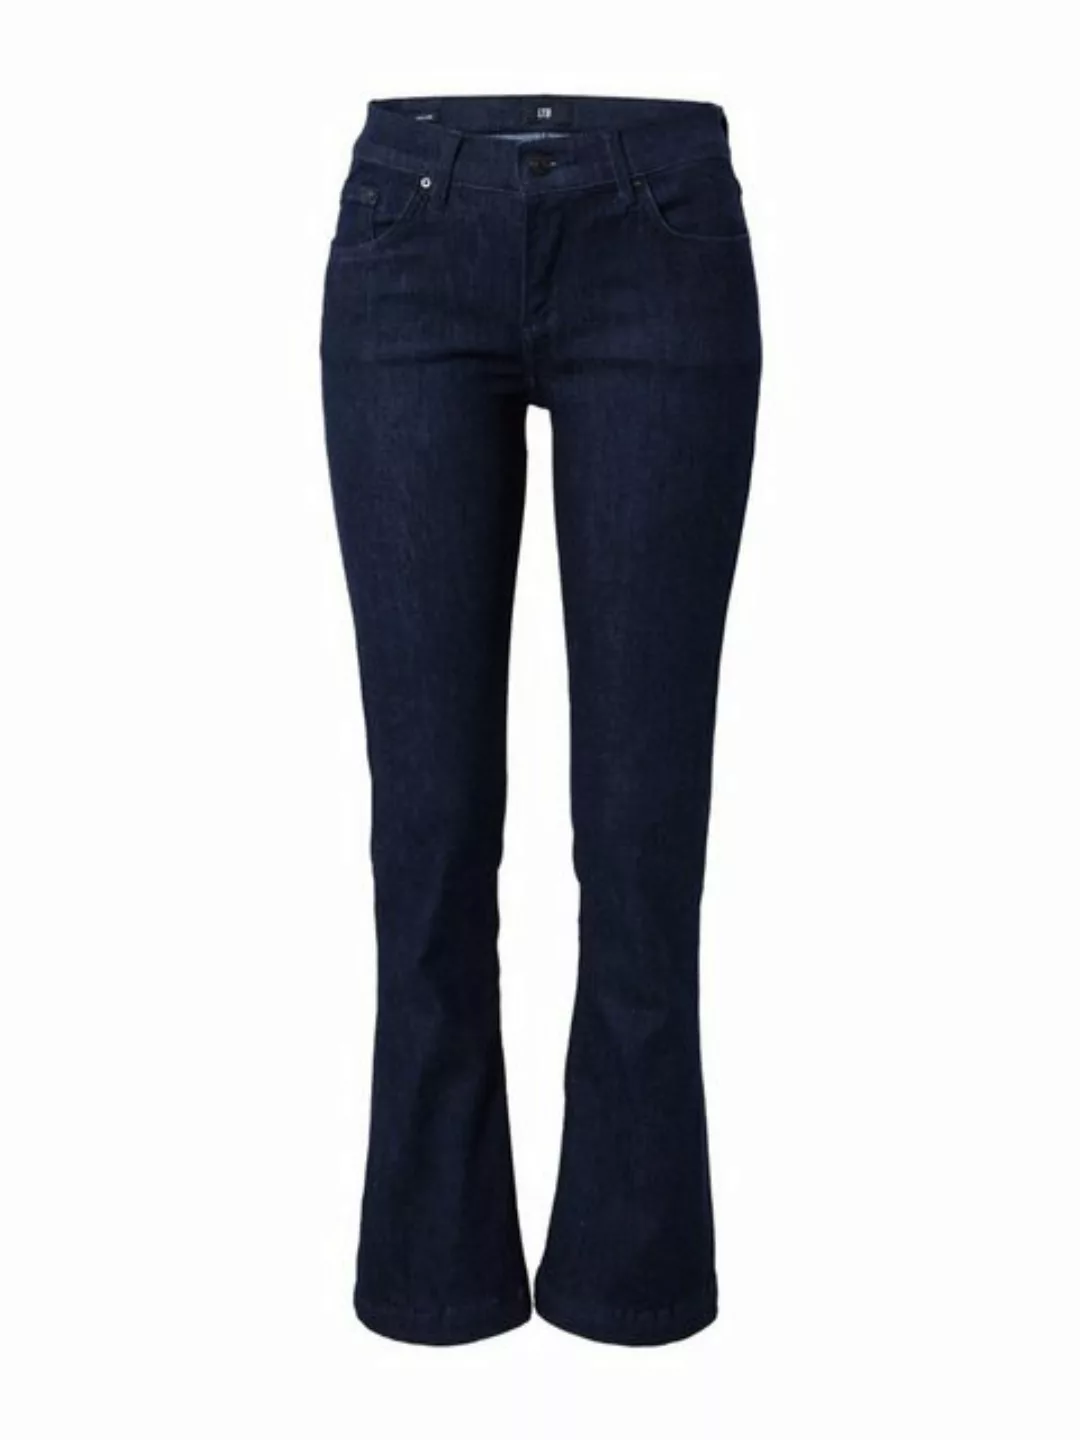 LTB Damen Jeans FALLON Flared Fit - Blau - Rinsed Wash günstig online kaufen